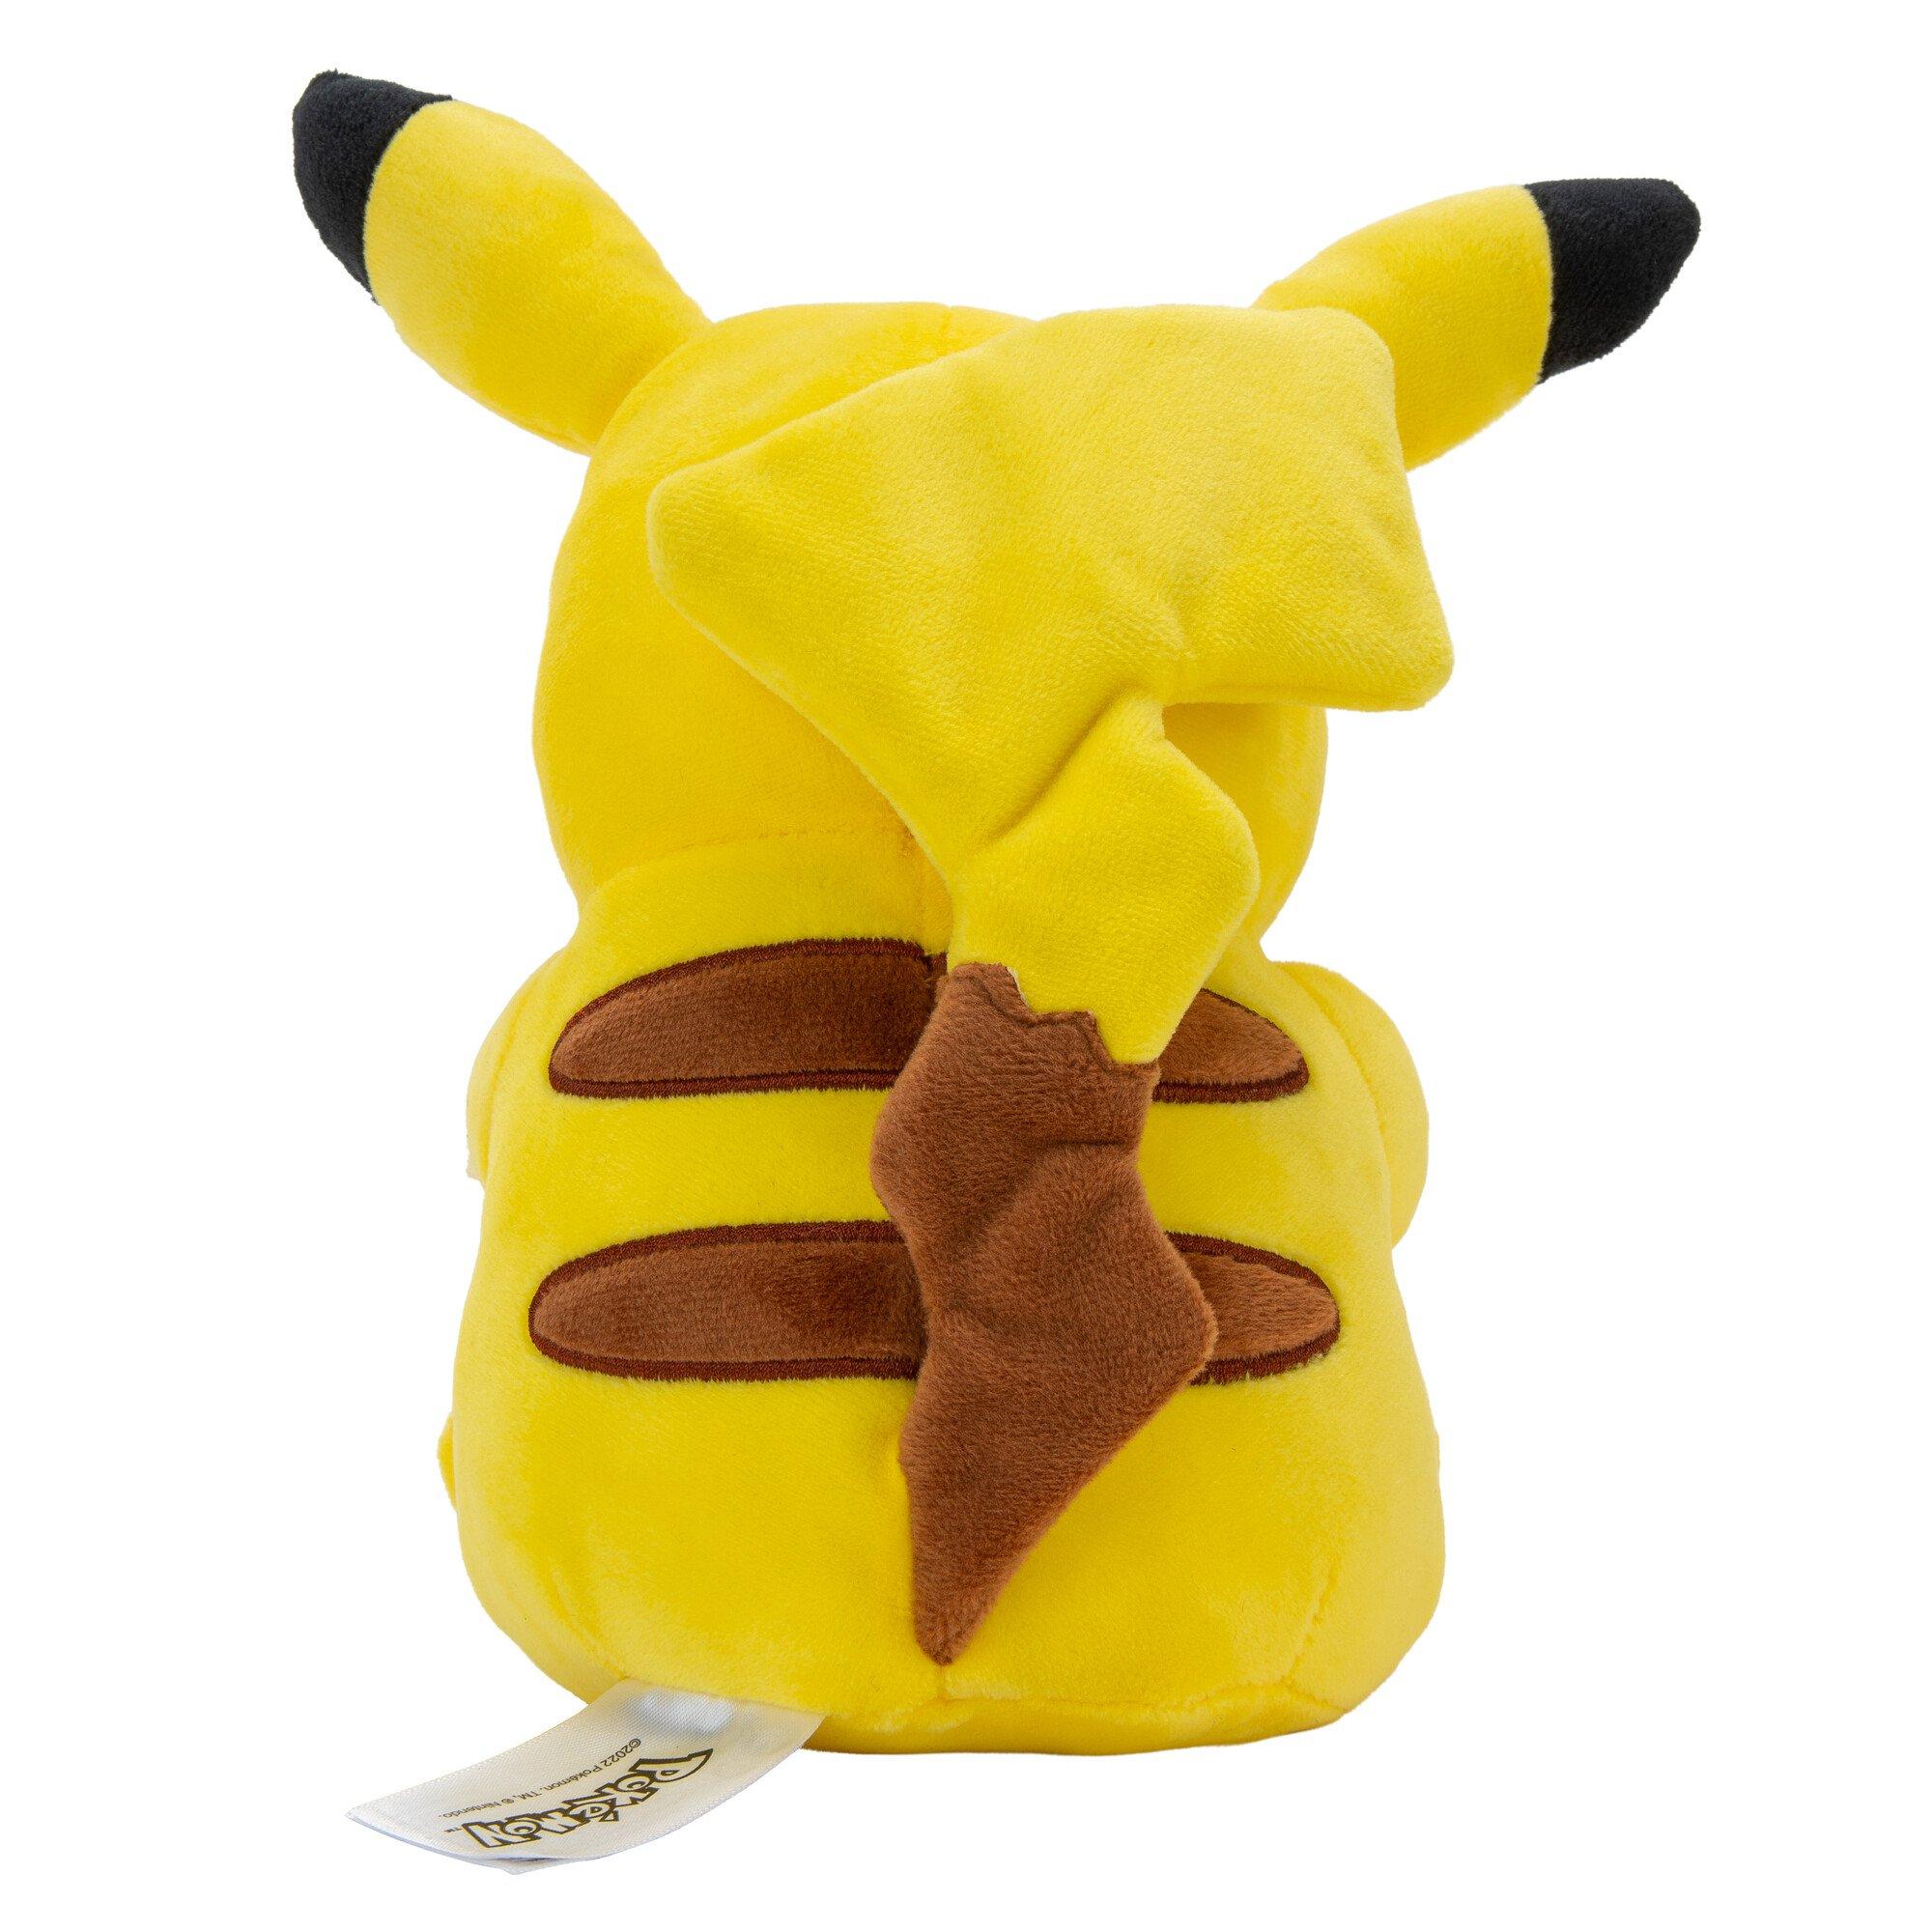 Pokemon Official & Premium Quality 8-Inch Pikachu Plush